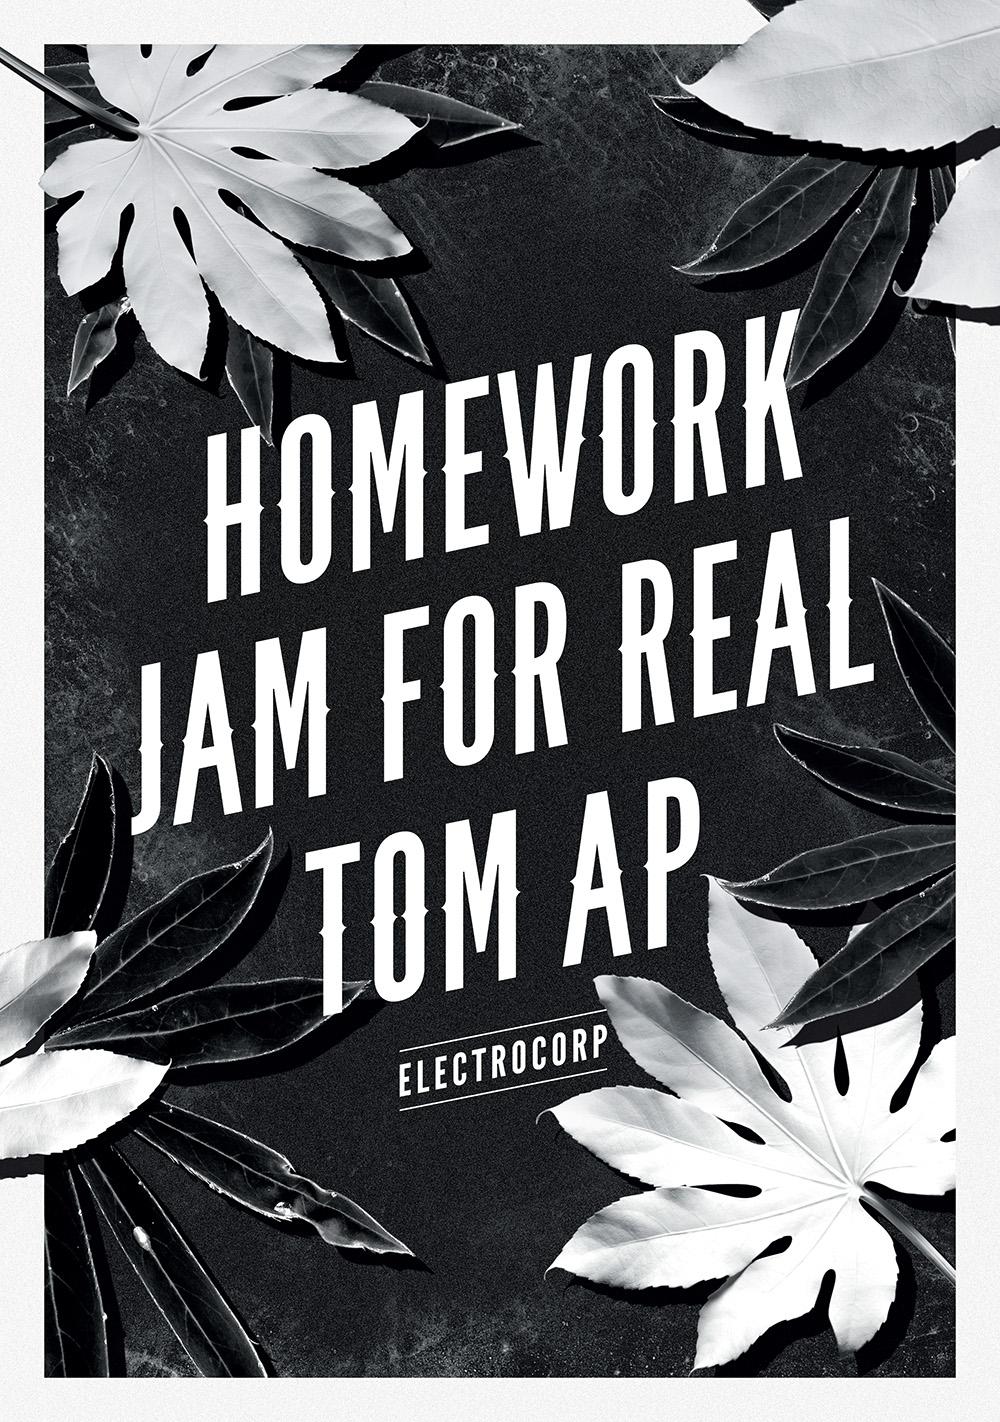 Electrocorp invite Homework, Tom AP et Jam For Real à l'Iboat le 22 janvier 2015